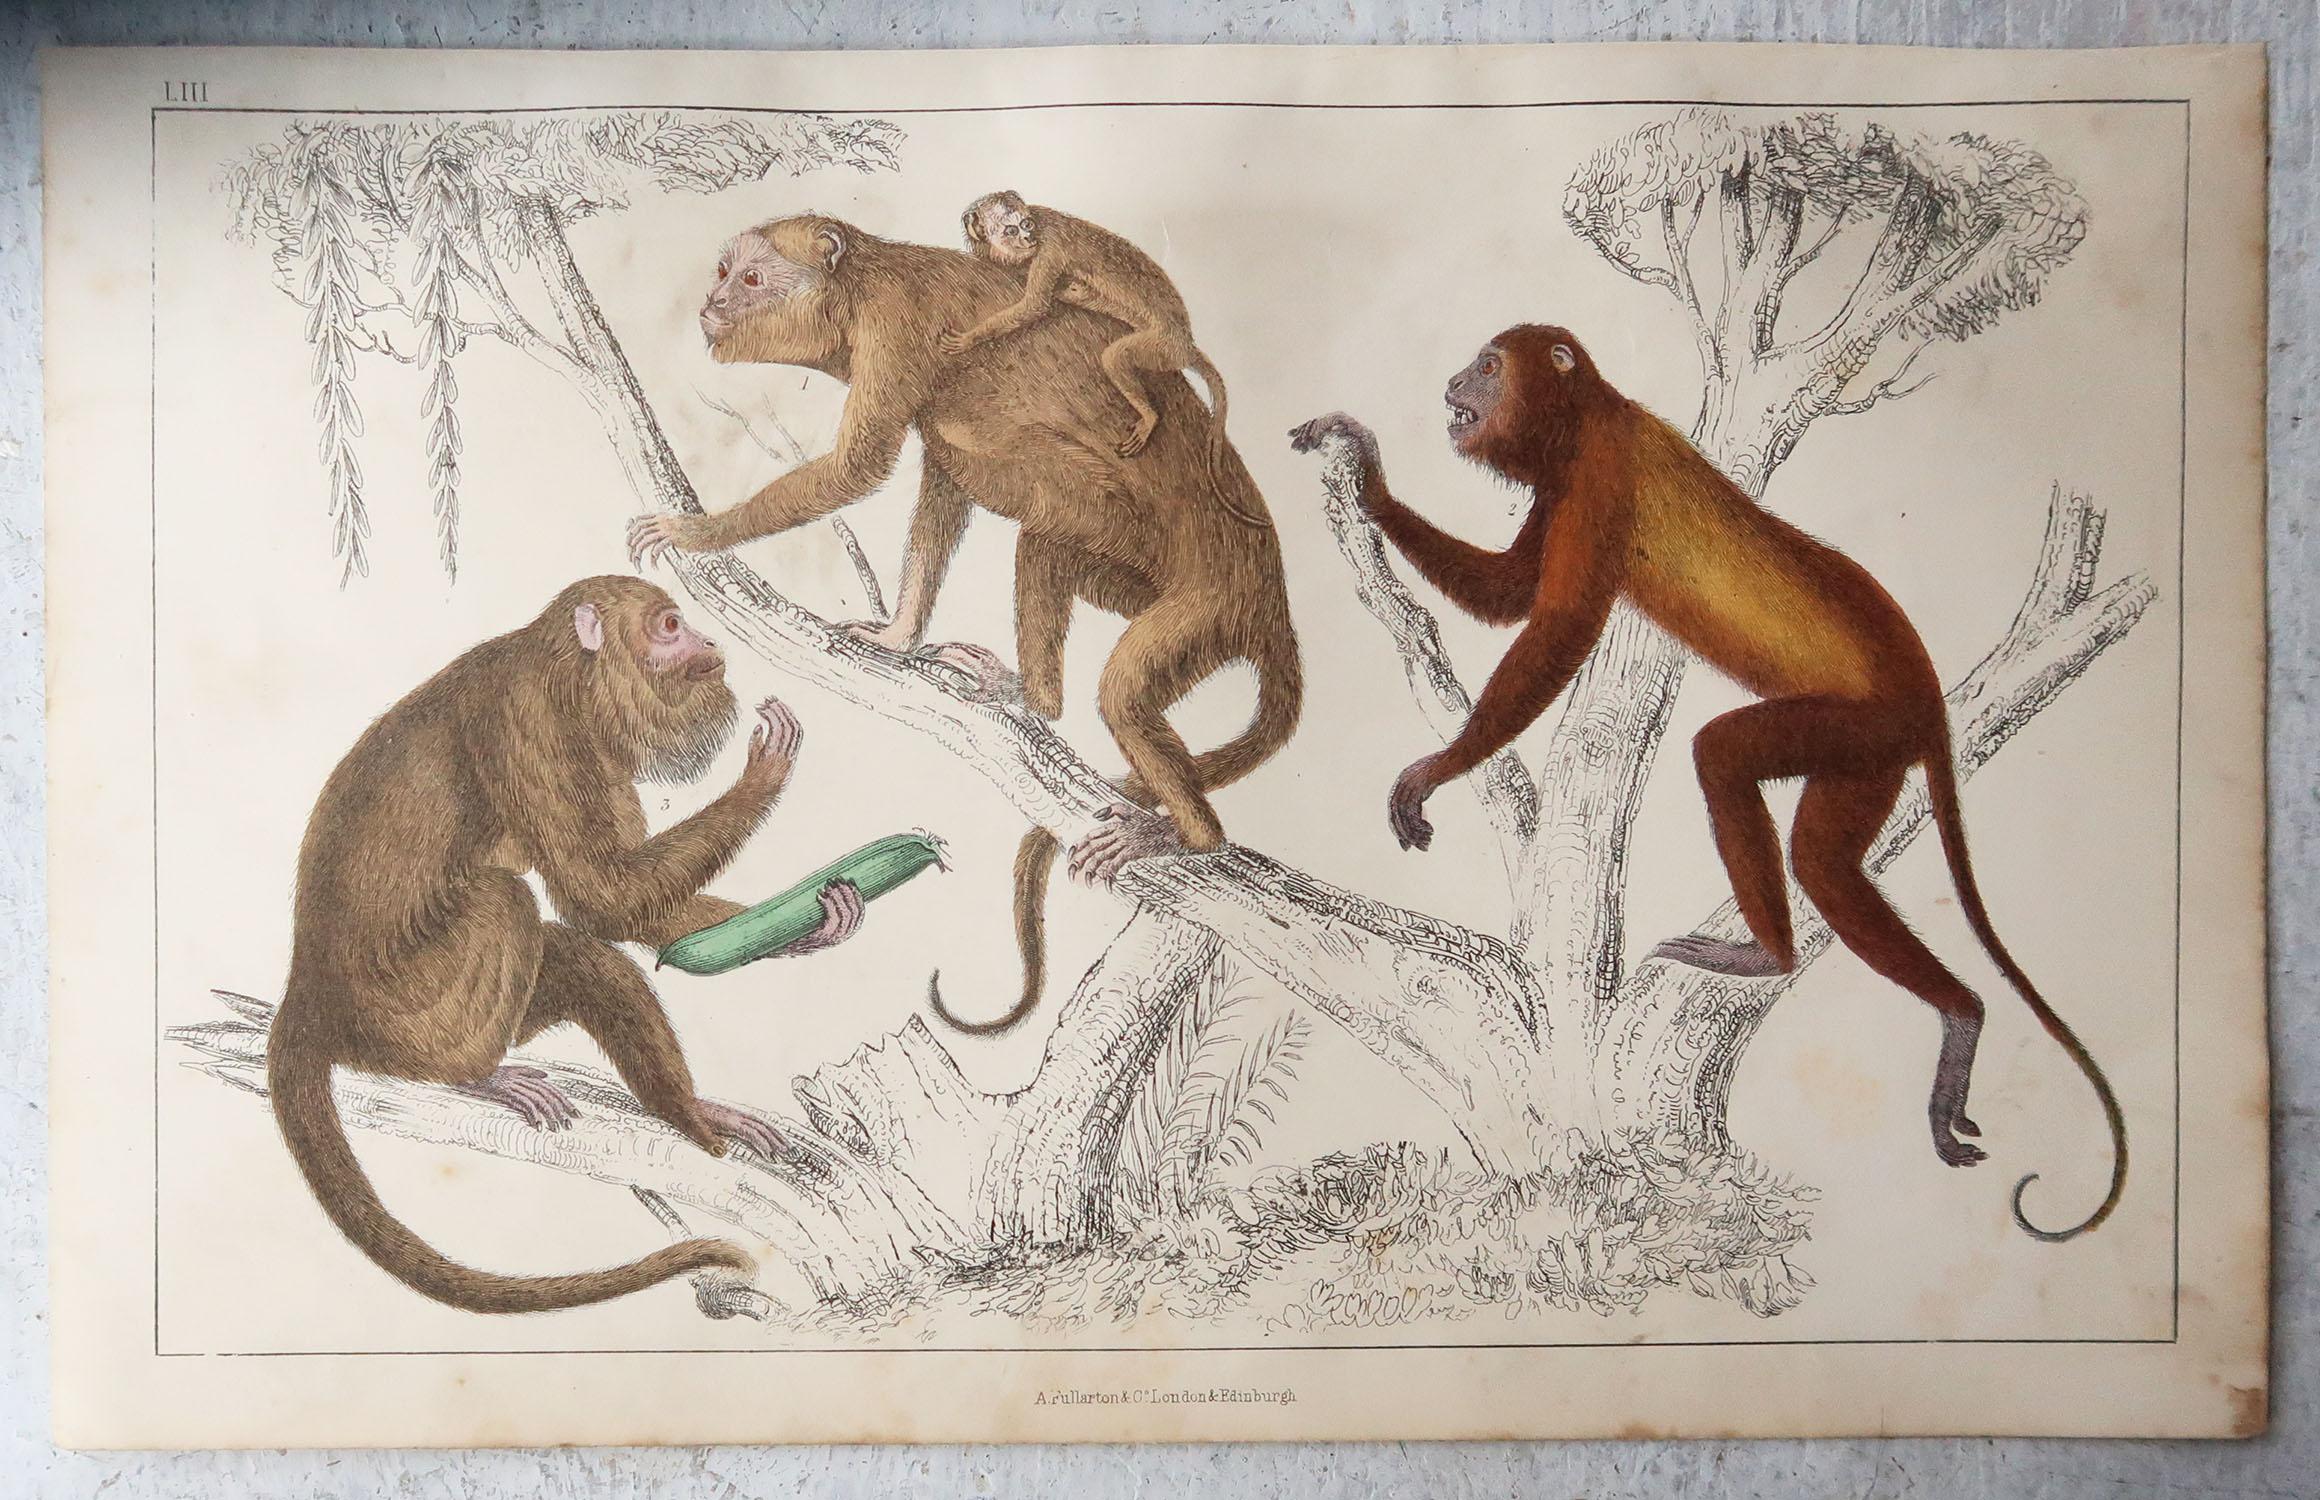 English Original Antique Print of Monkeys, 1847 'Unframed'